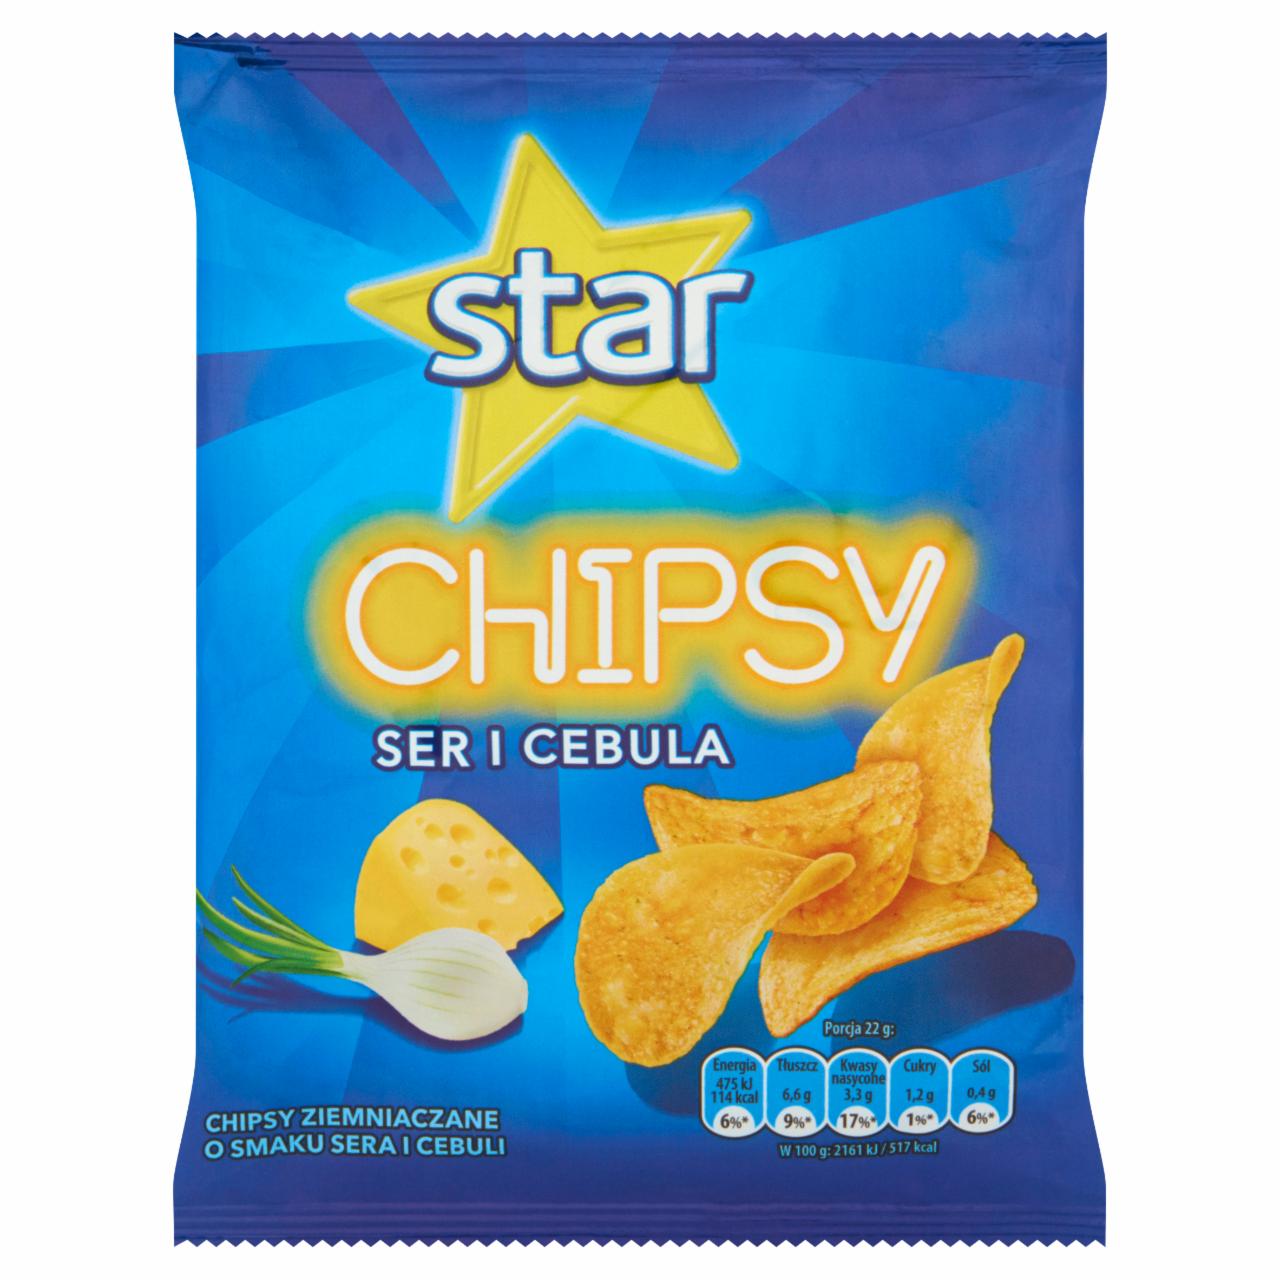 Zdjęcia - Star Chipsy ser i cebula 22 g